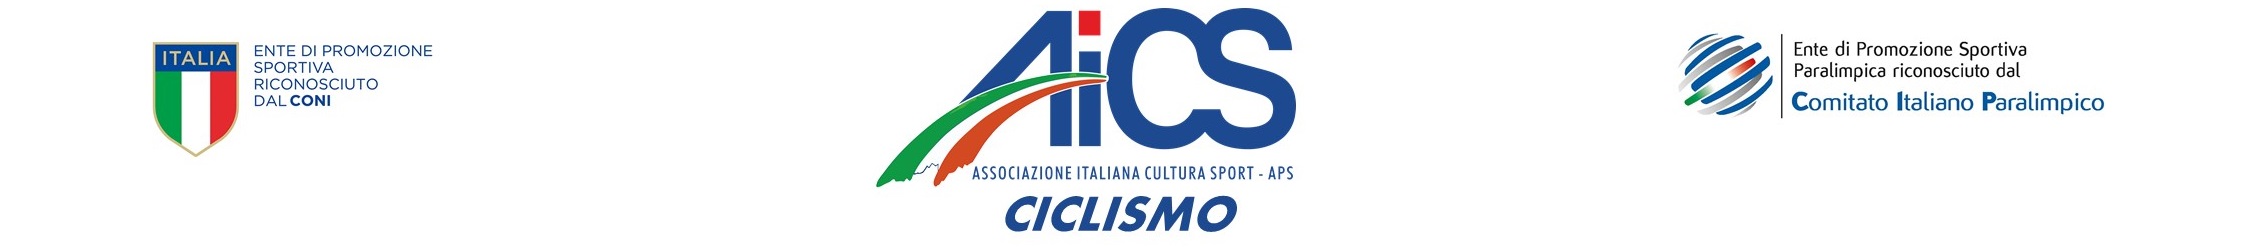 www.ciclismo.aics.it